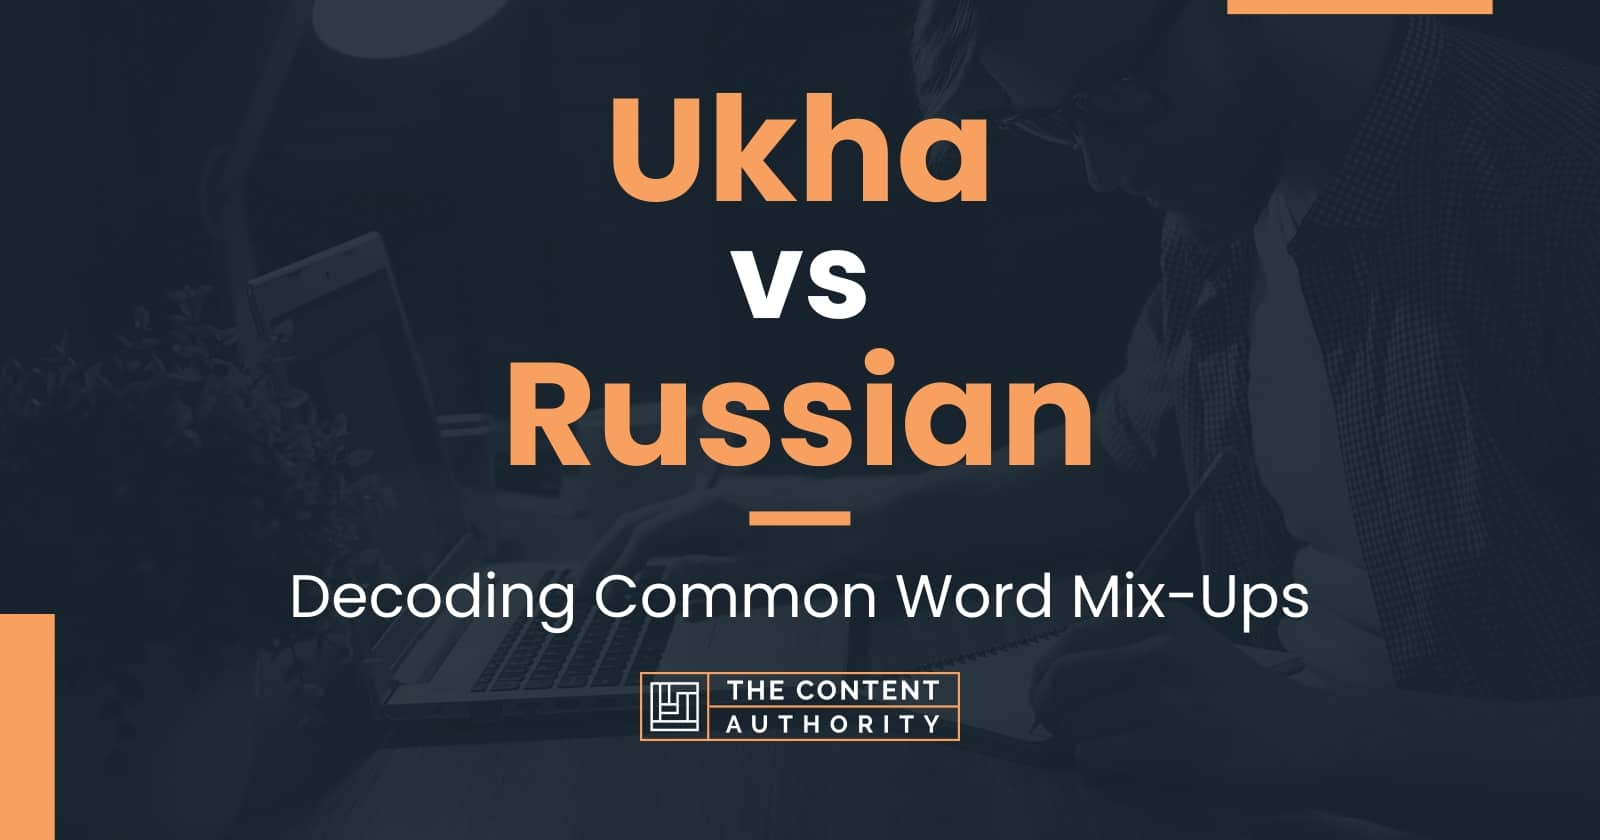 Ukha vs Russian: Decoding Common Word Mix-Ups